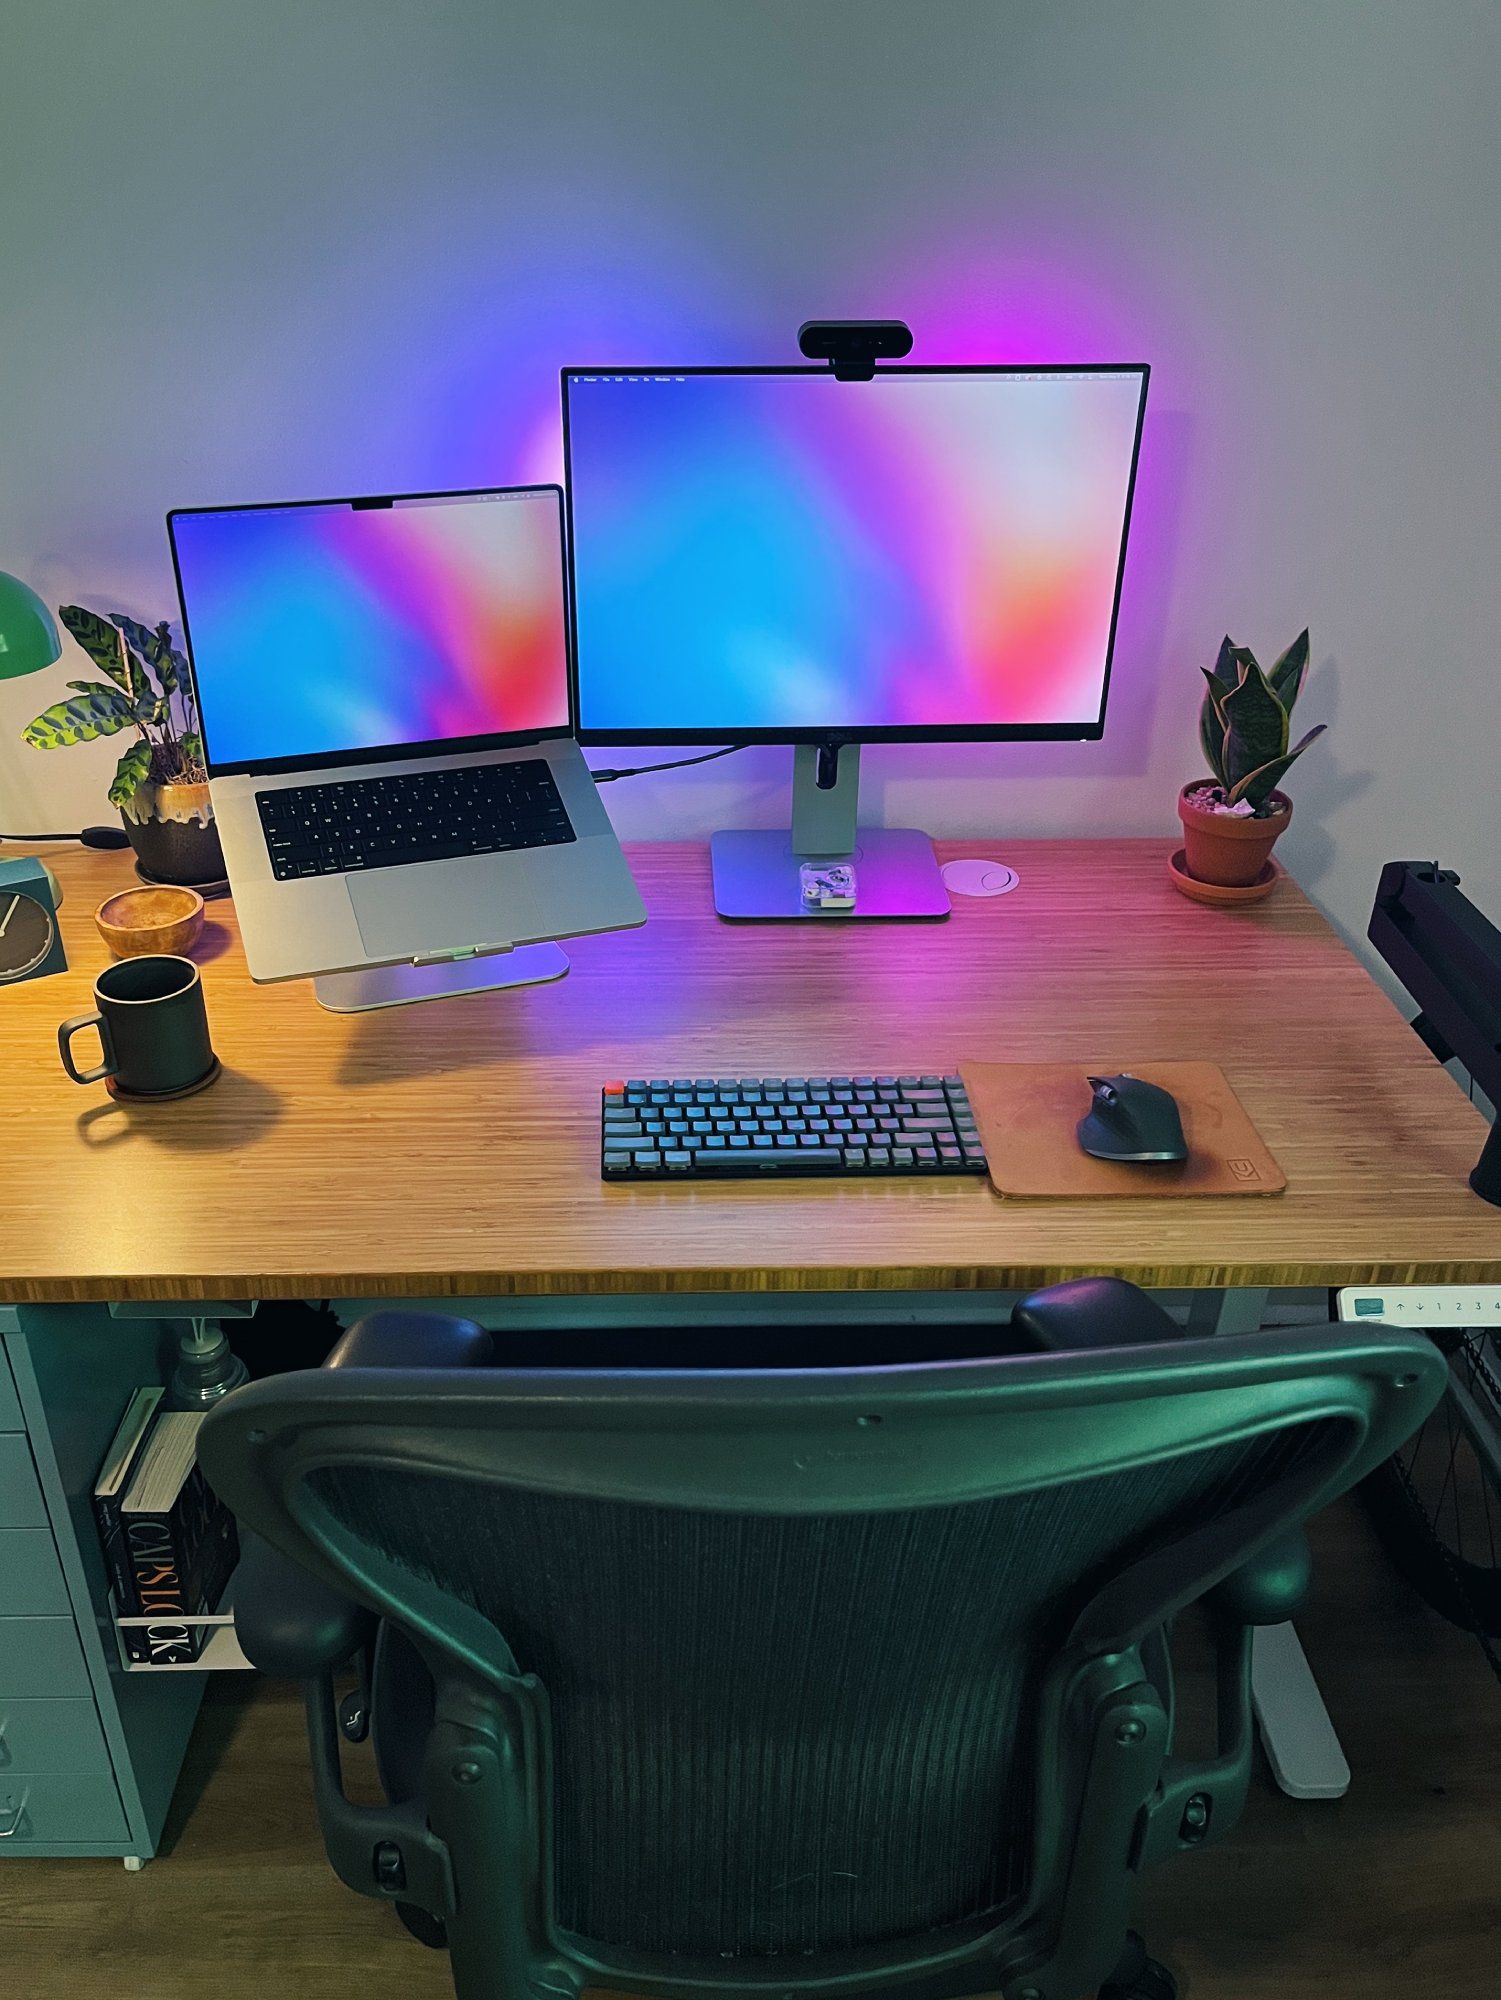 A minimal desk setup featuring a Dell UltraSharp monitor, a MacBook Pro laptop, a Keychron K3 keyboard, a Logitech MX3 mouse, and two houseplants